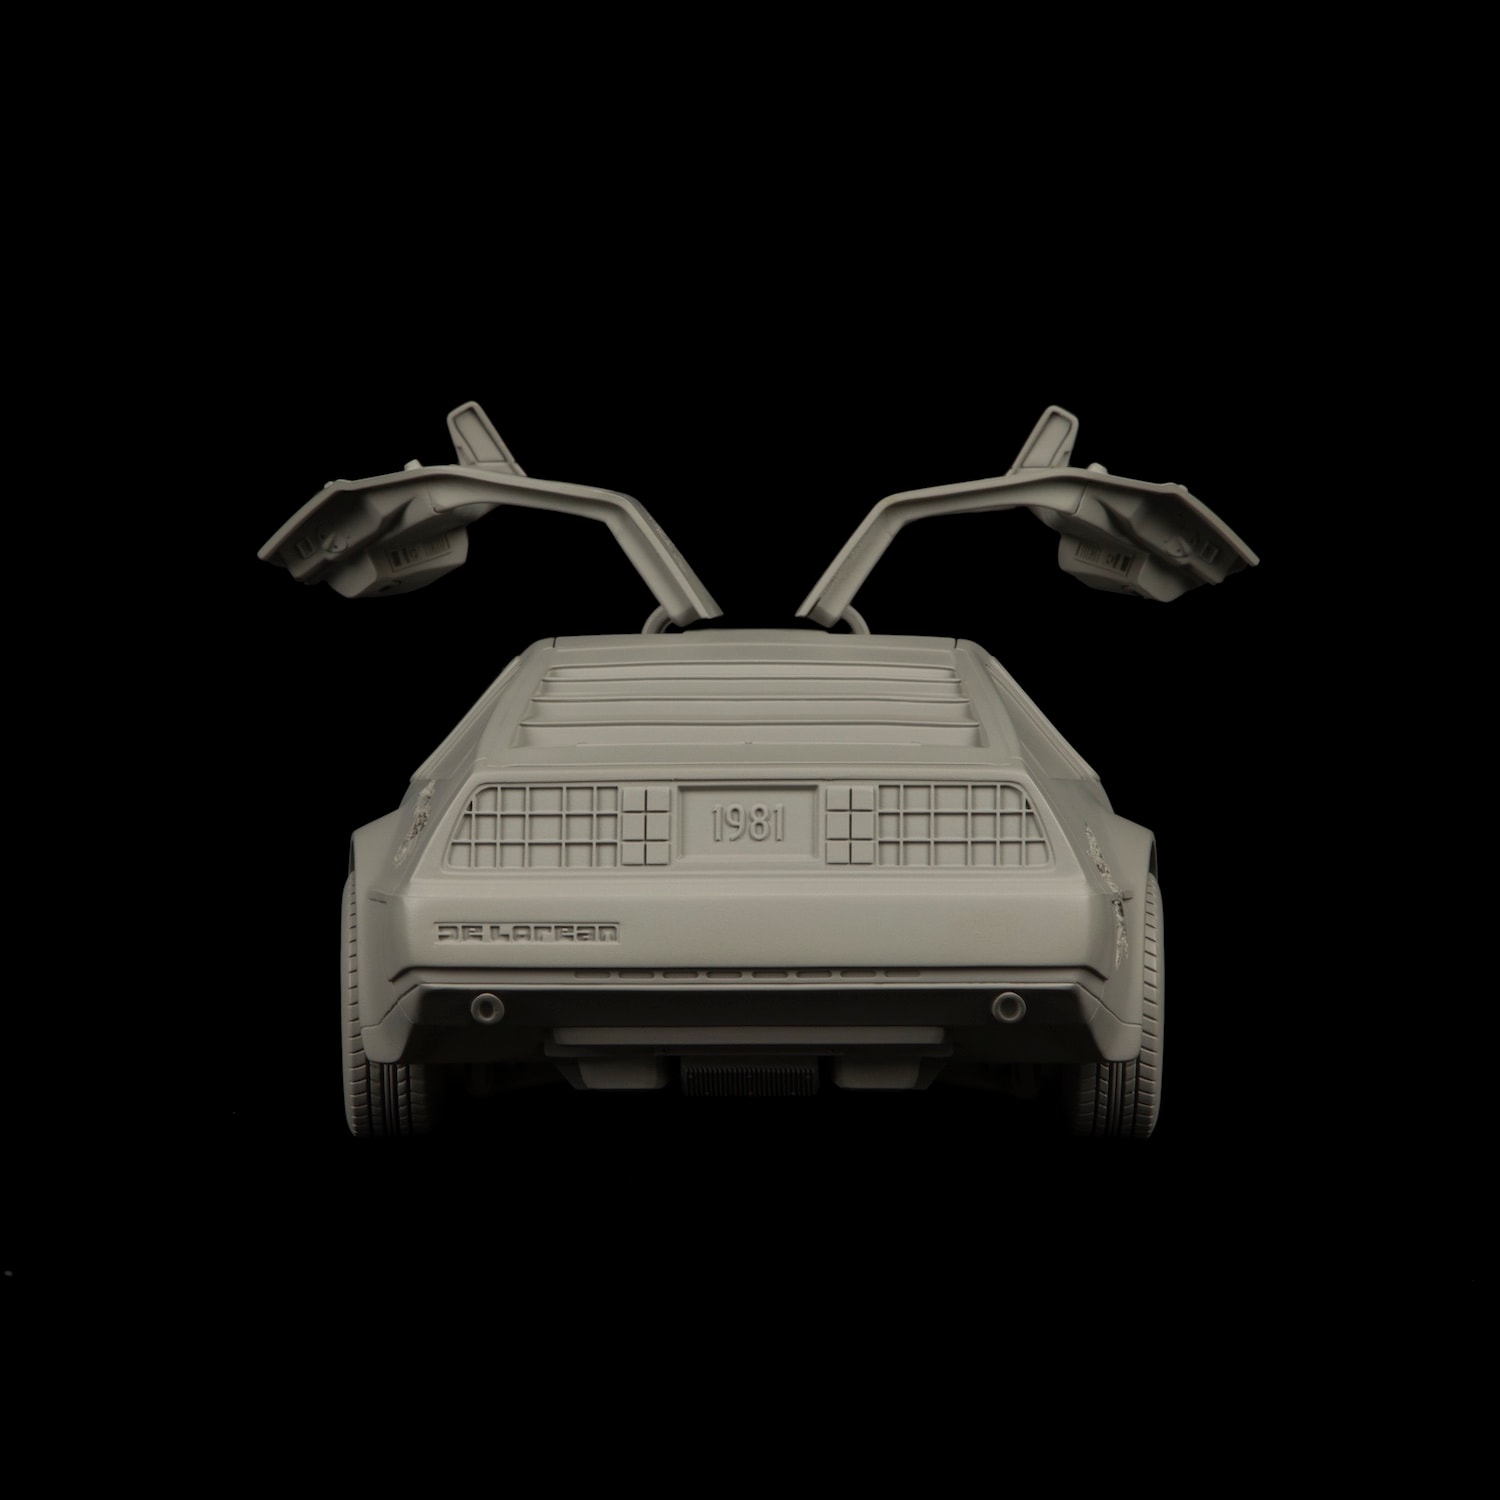 Archive Editions 携手 Daniel Arsham 发布全新限量艺术作品《被侵蚀的 DeLorean》